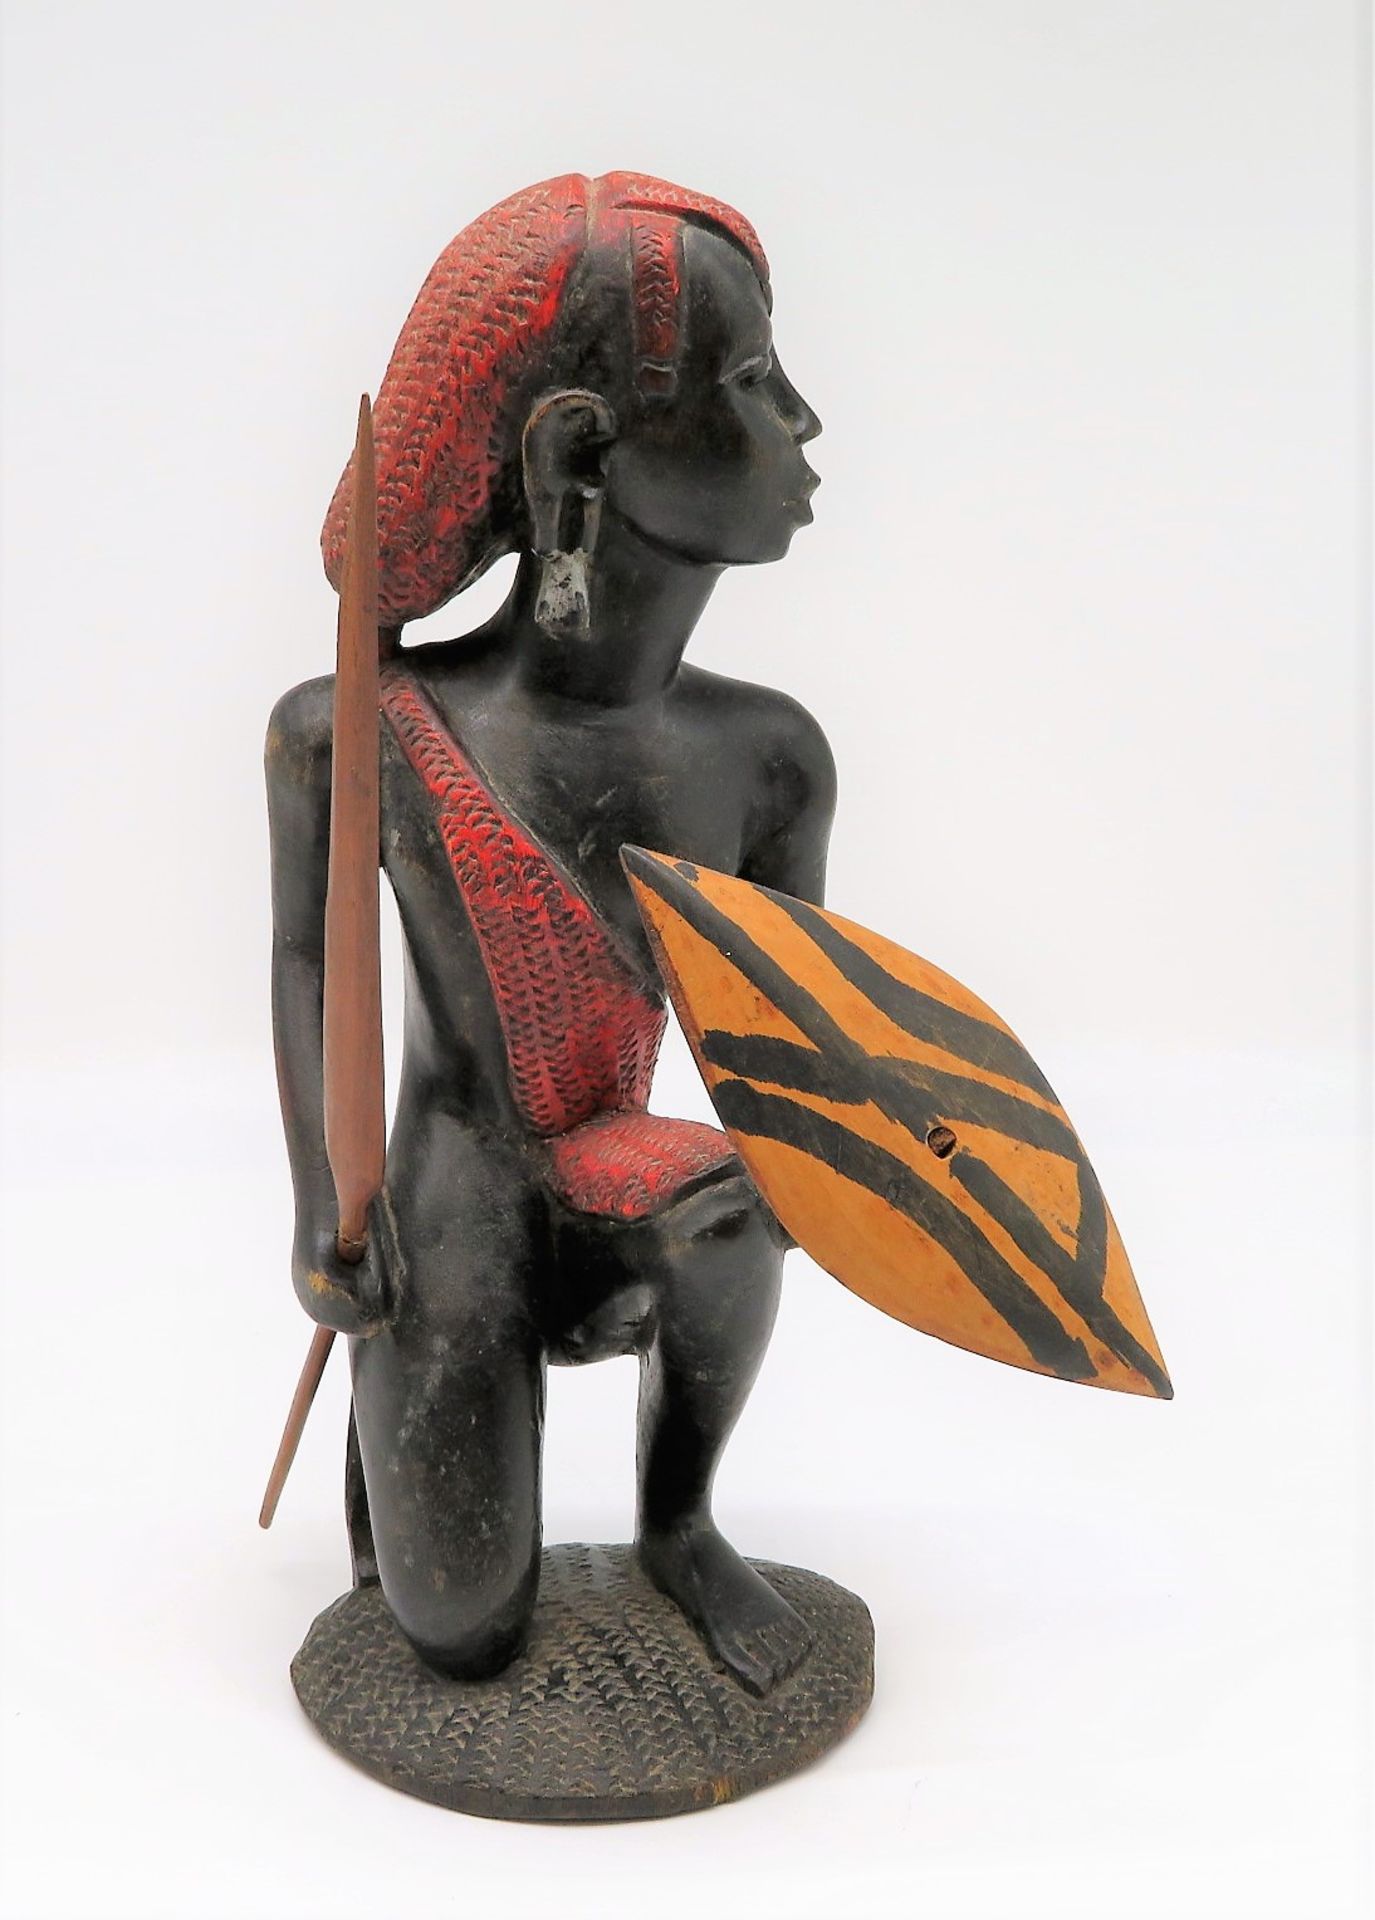 Massai Krieger, Afrika, Kenia, Holz geschnitzt und farbig gefasst, h 34,5 cm, d 18 cm.